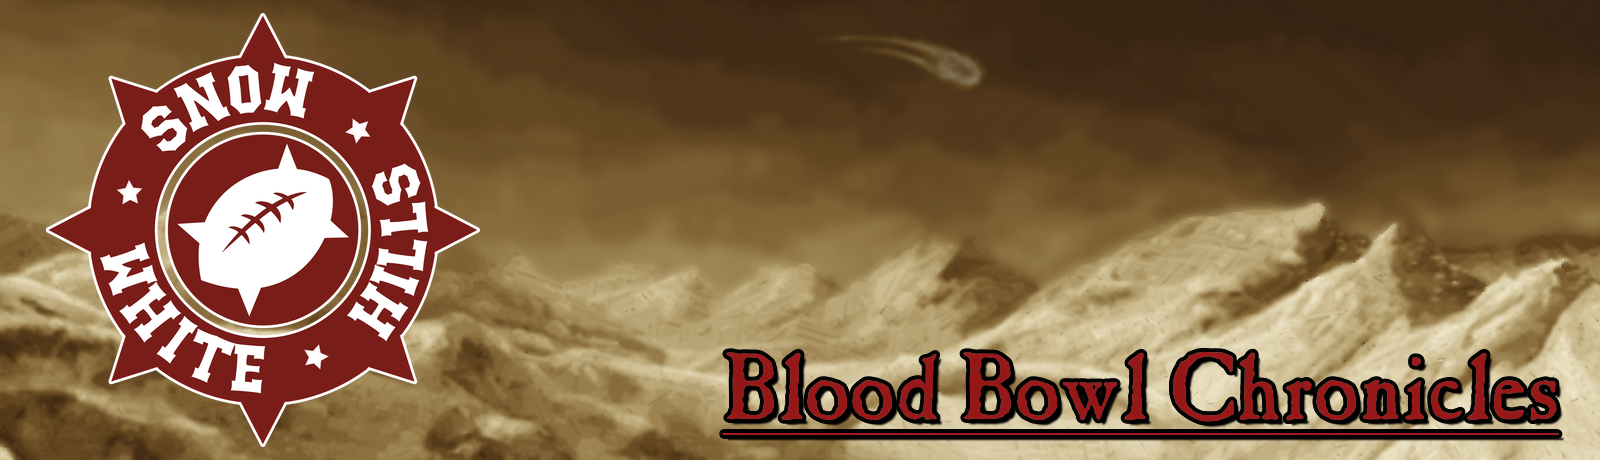 Snow White Hills Blood Bowl Chronicles